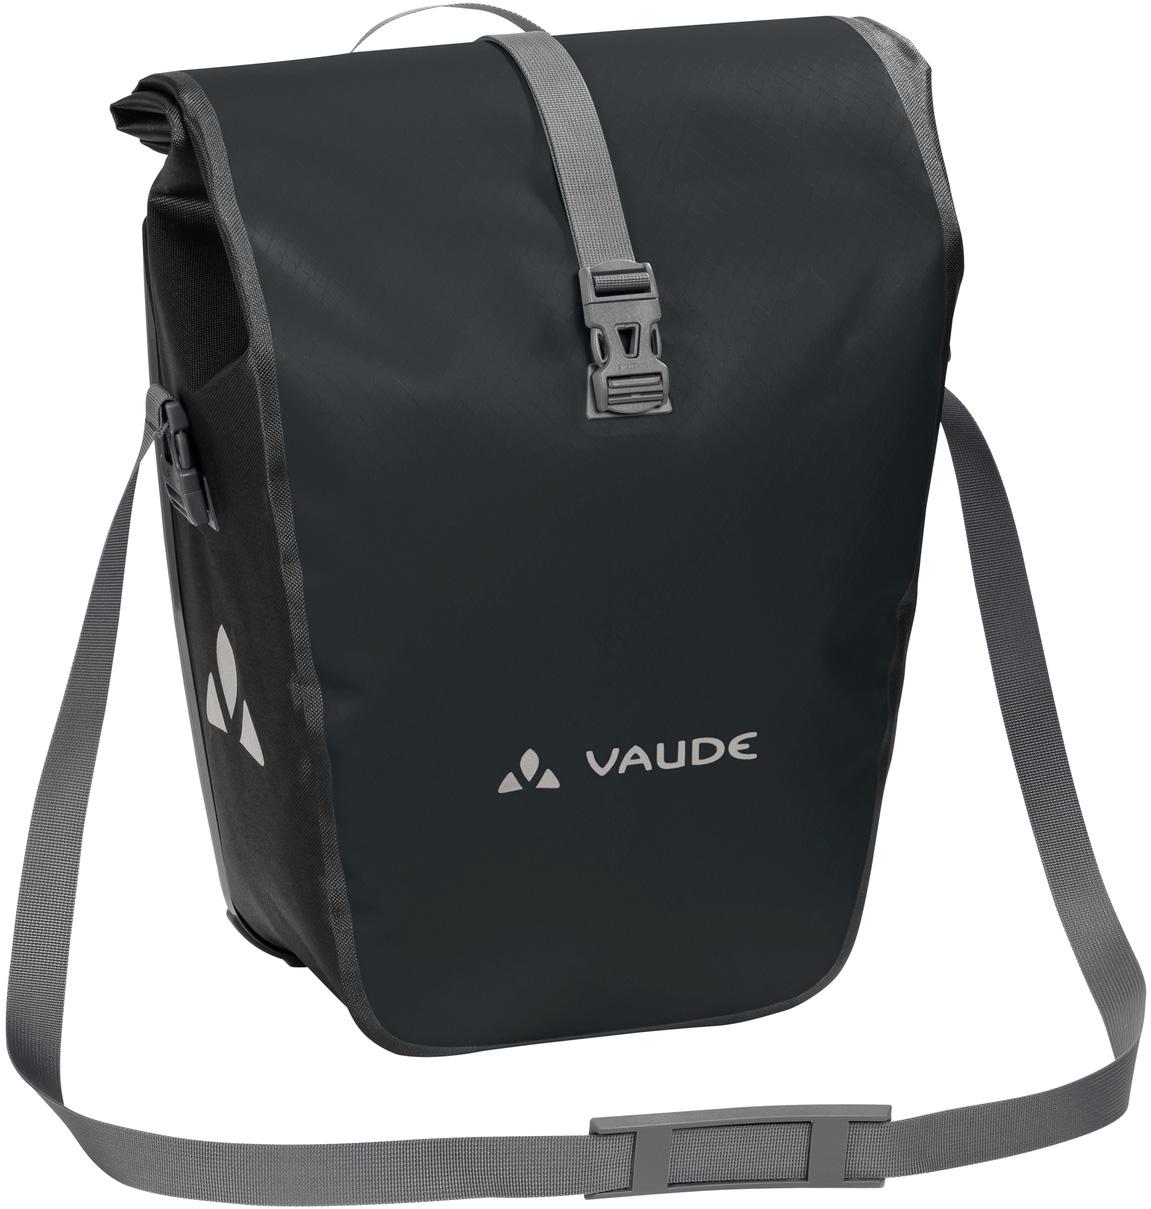 Vaude Aqua Rear Pannier Bags (pair)  Black